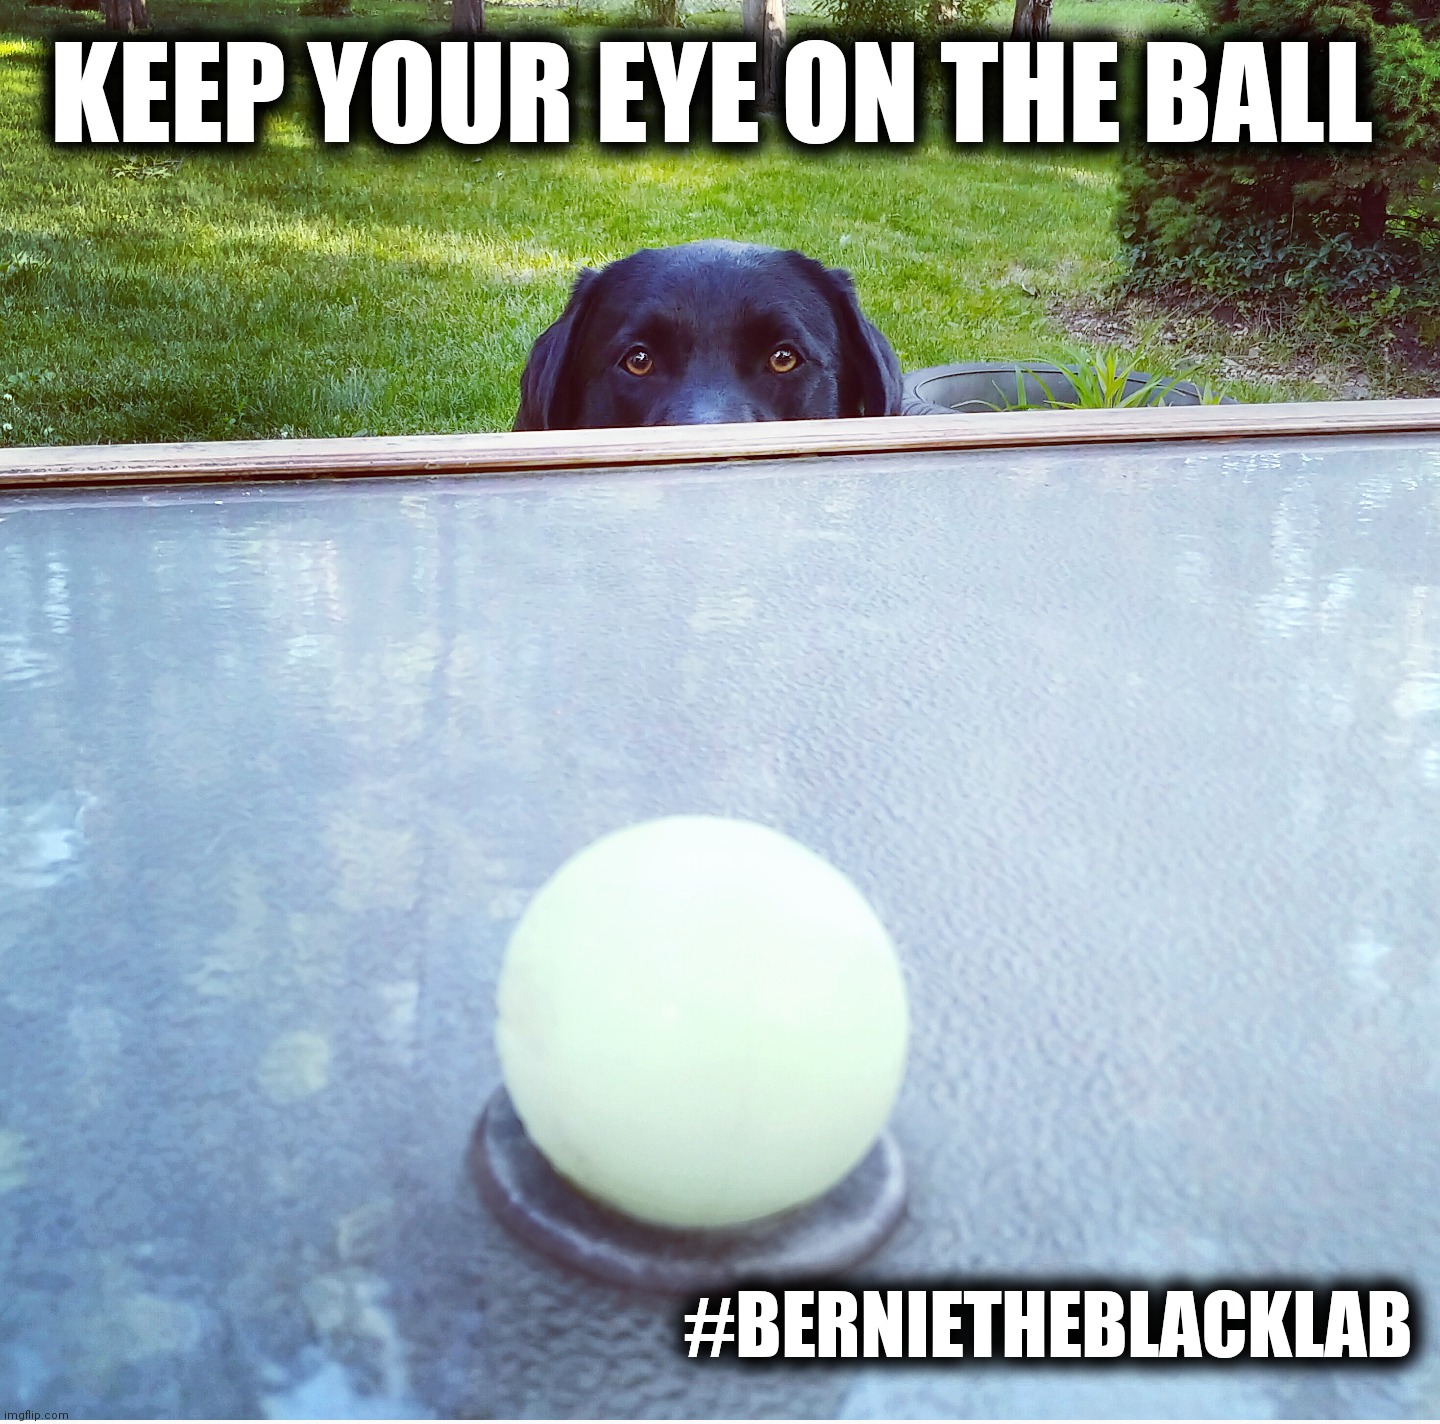 Keep your eye on the ball |  KEEP YOUR EYE ON THE BALL; #BERNIETHEBLACKLAB | image tagged in keep your eye on the ball,ball,dog,bernie the black lab,cute,memes | made w/ Imgflip meme maker